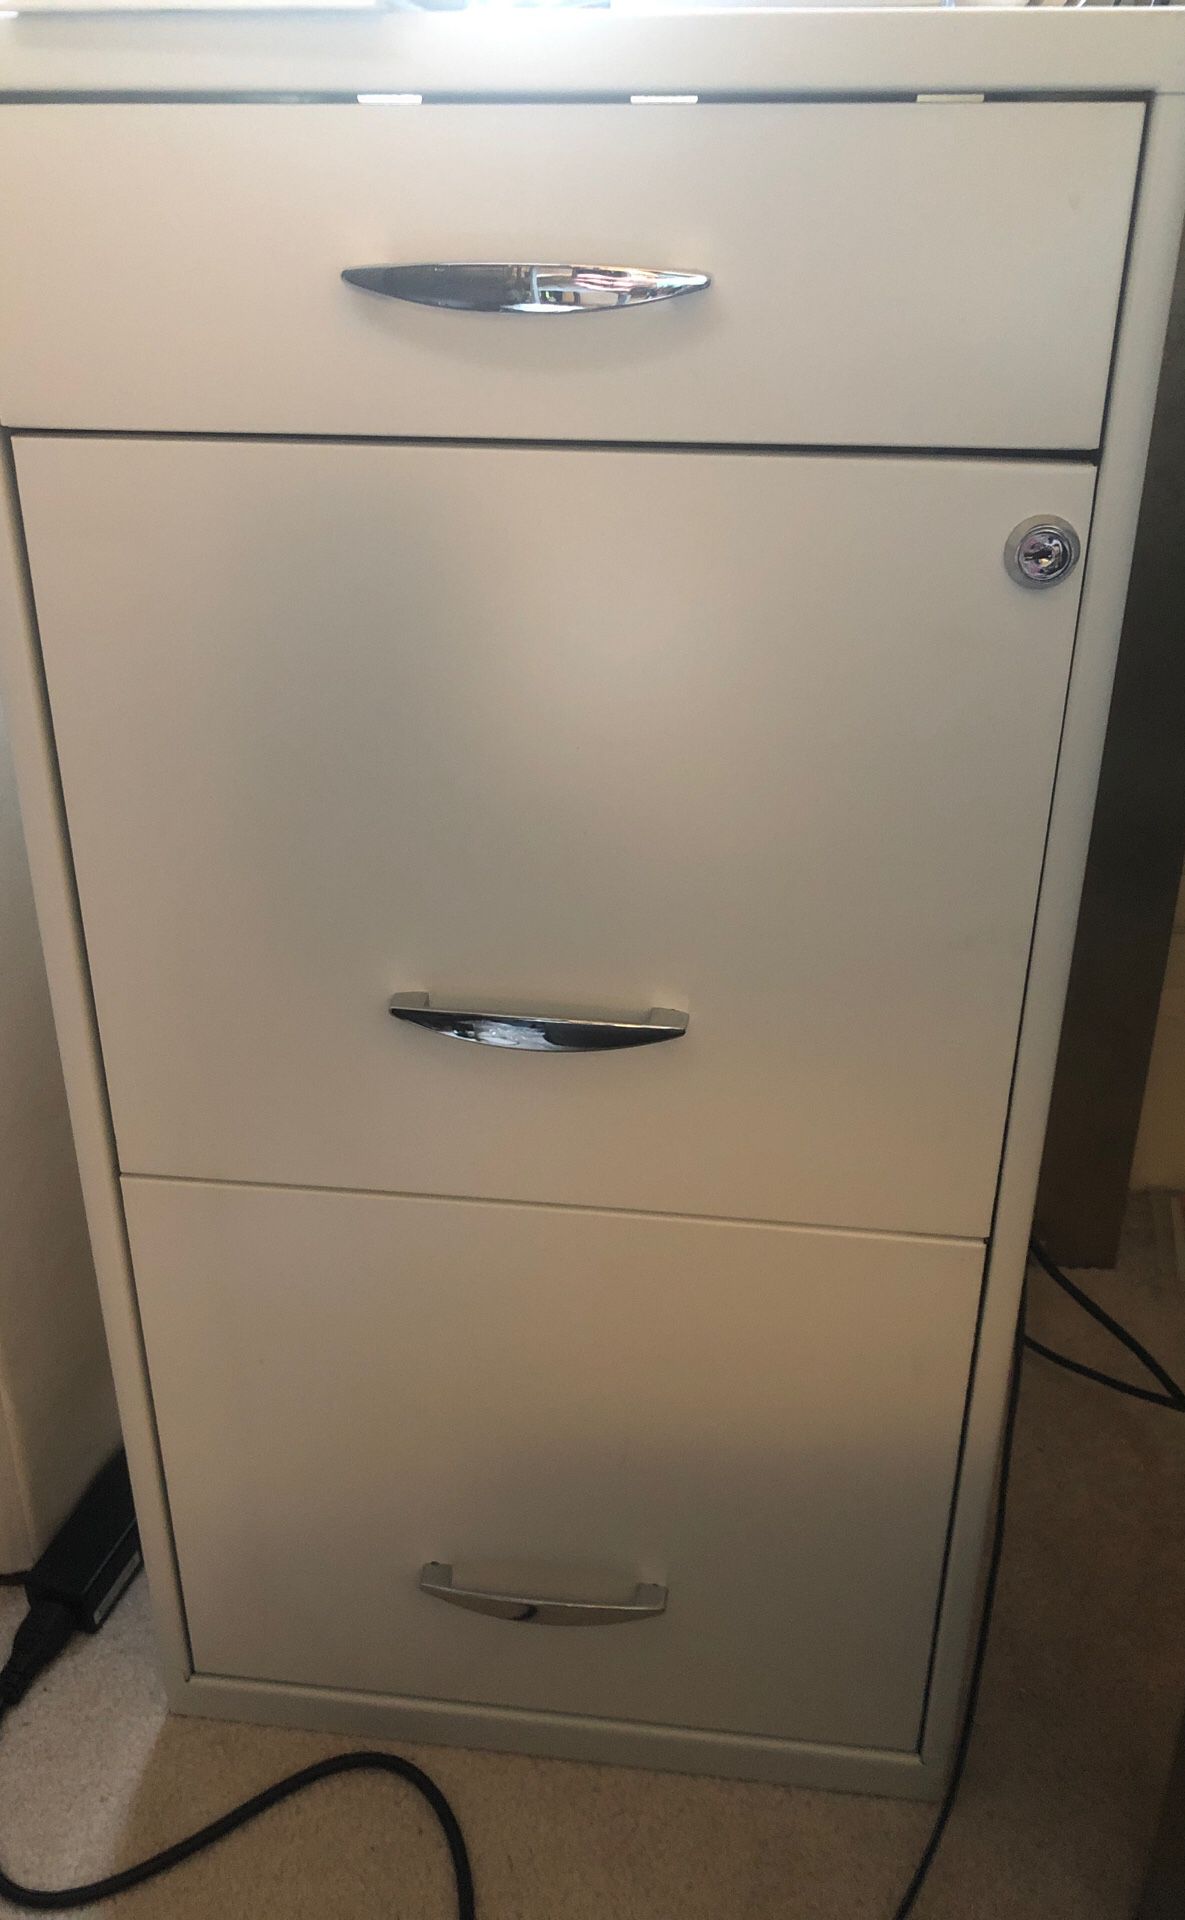 3 drawer file cabinet